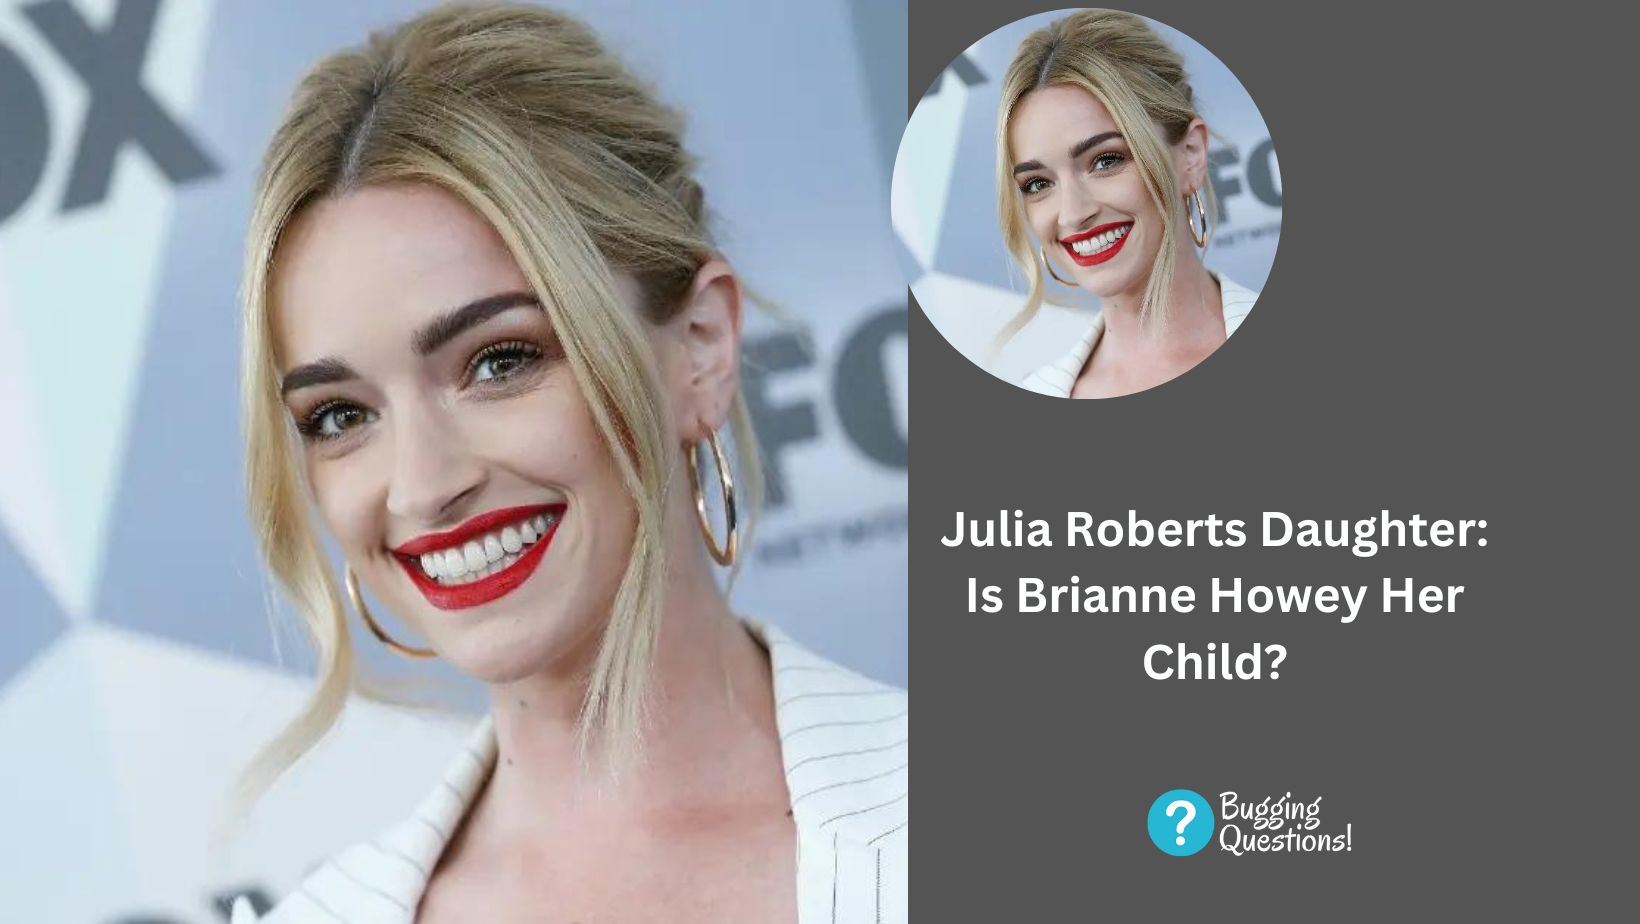 Julia Roberts Daughter: Is Brianne Howey Her Child?